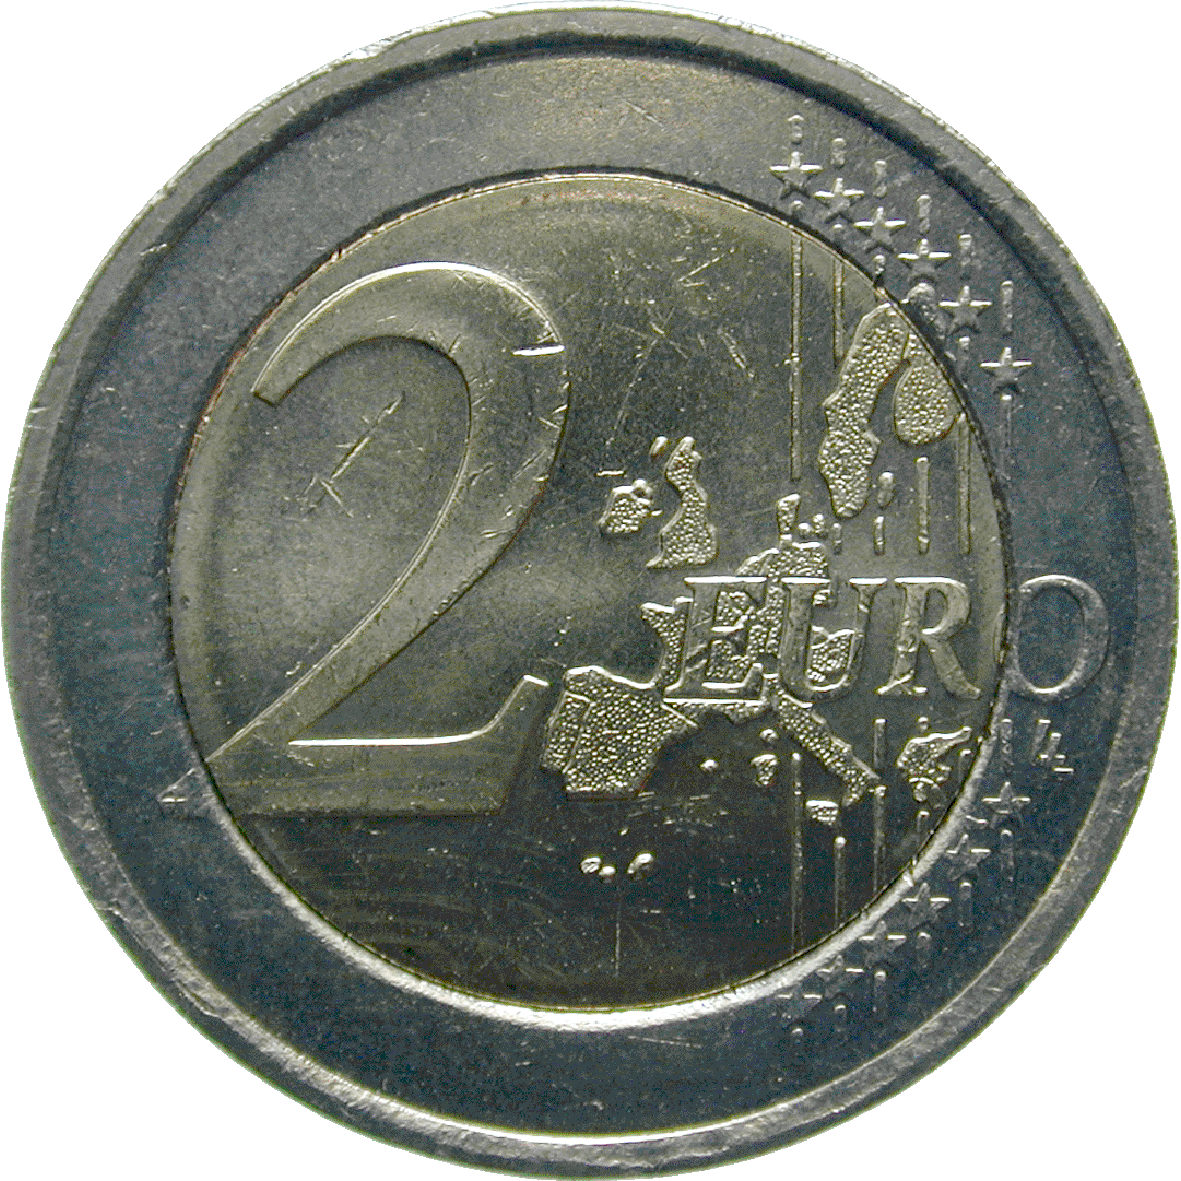 Republic of Ireland, 2 Euros 2002 (obverse)